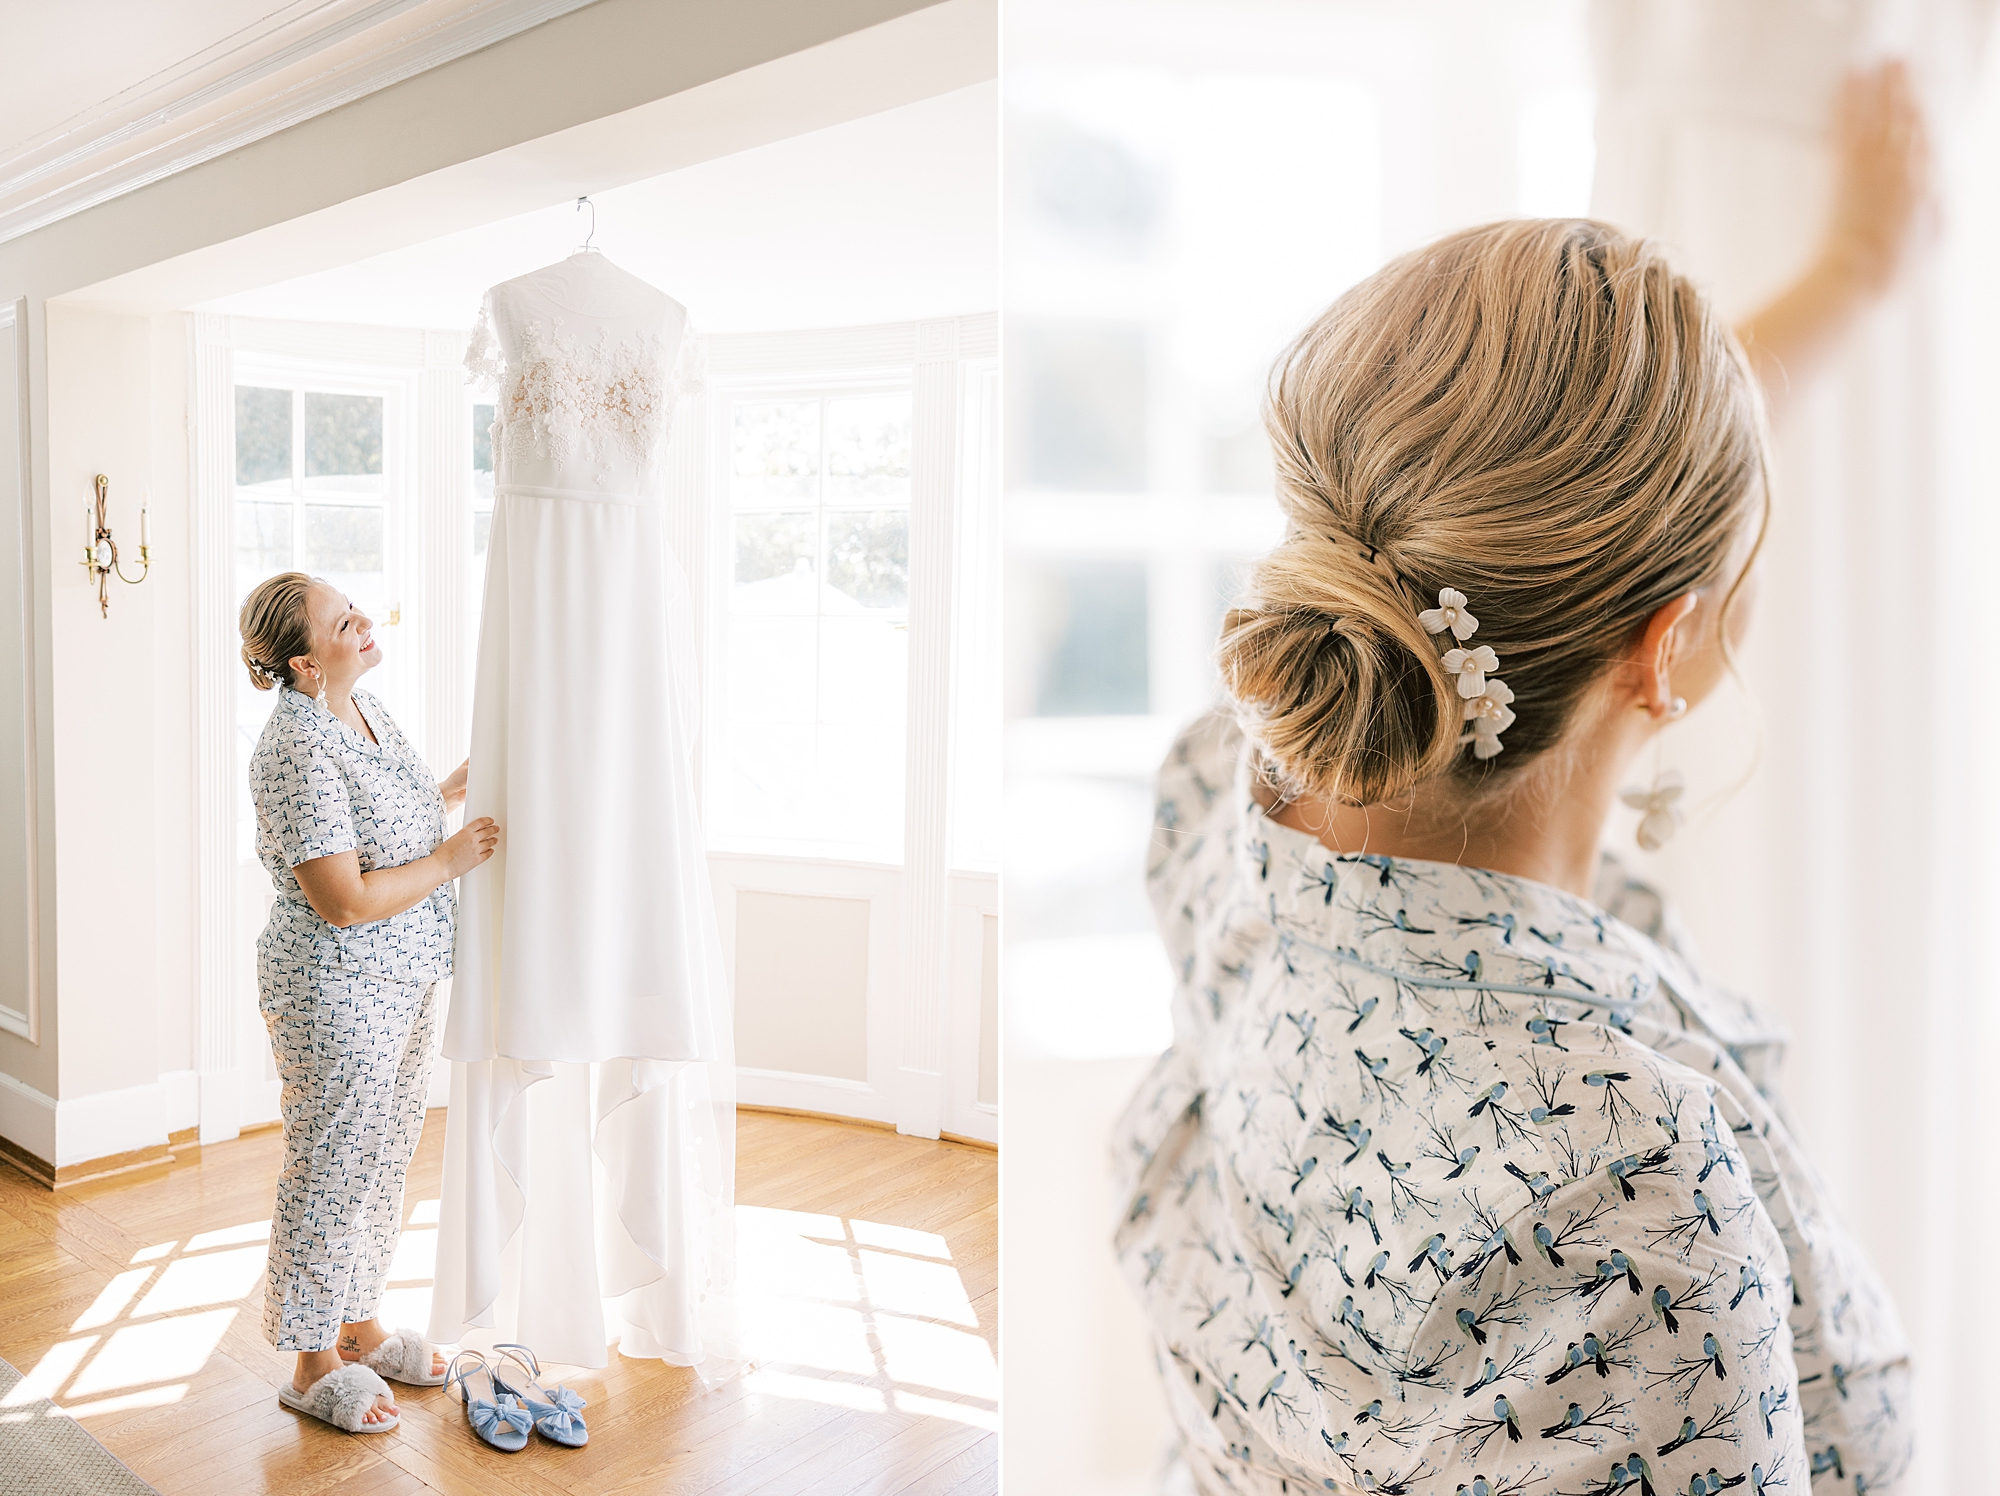 blonde bride looks up at wedding dress hanging in window 